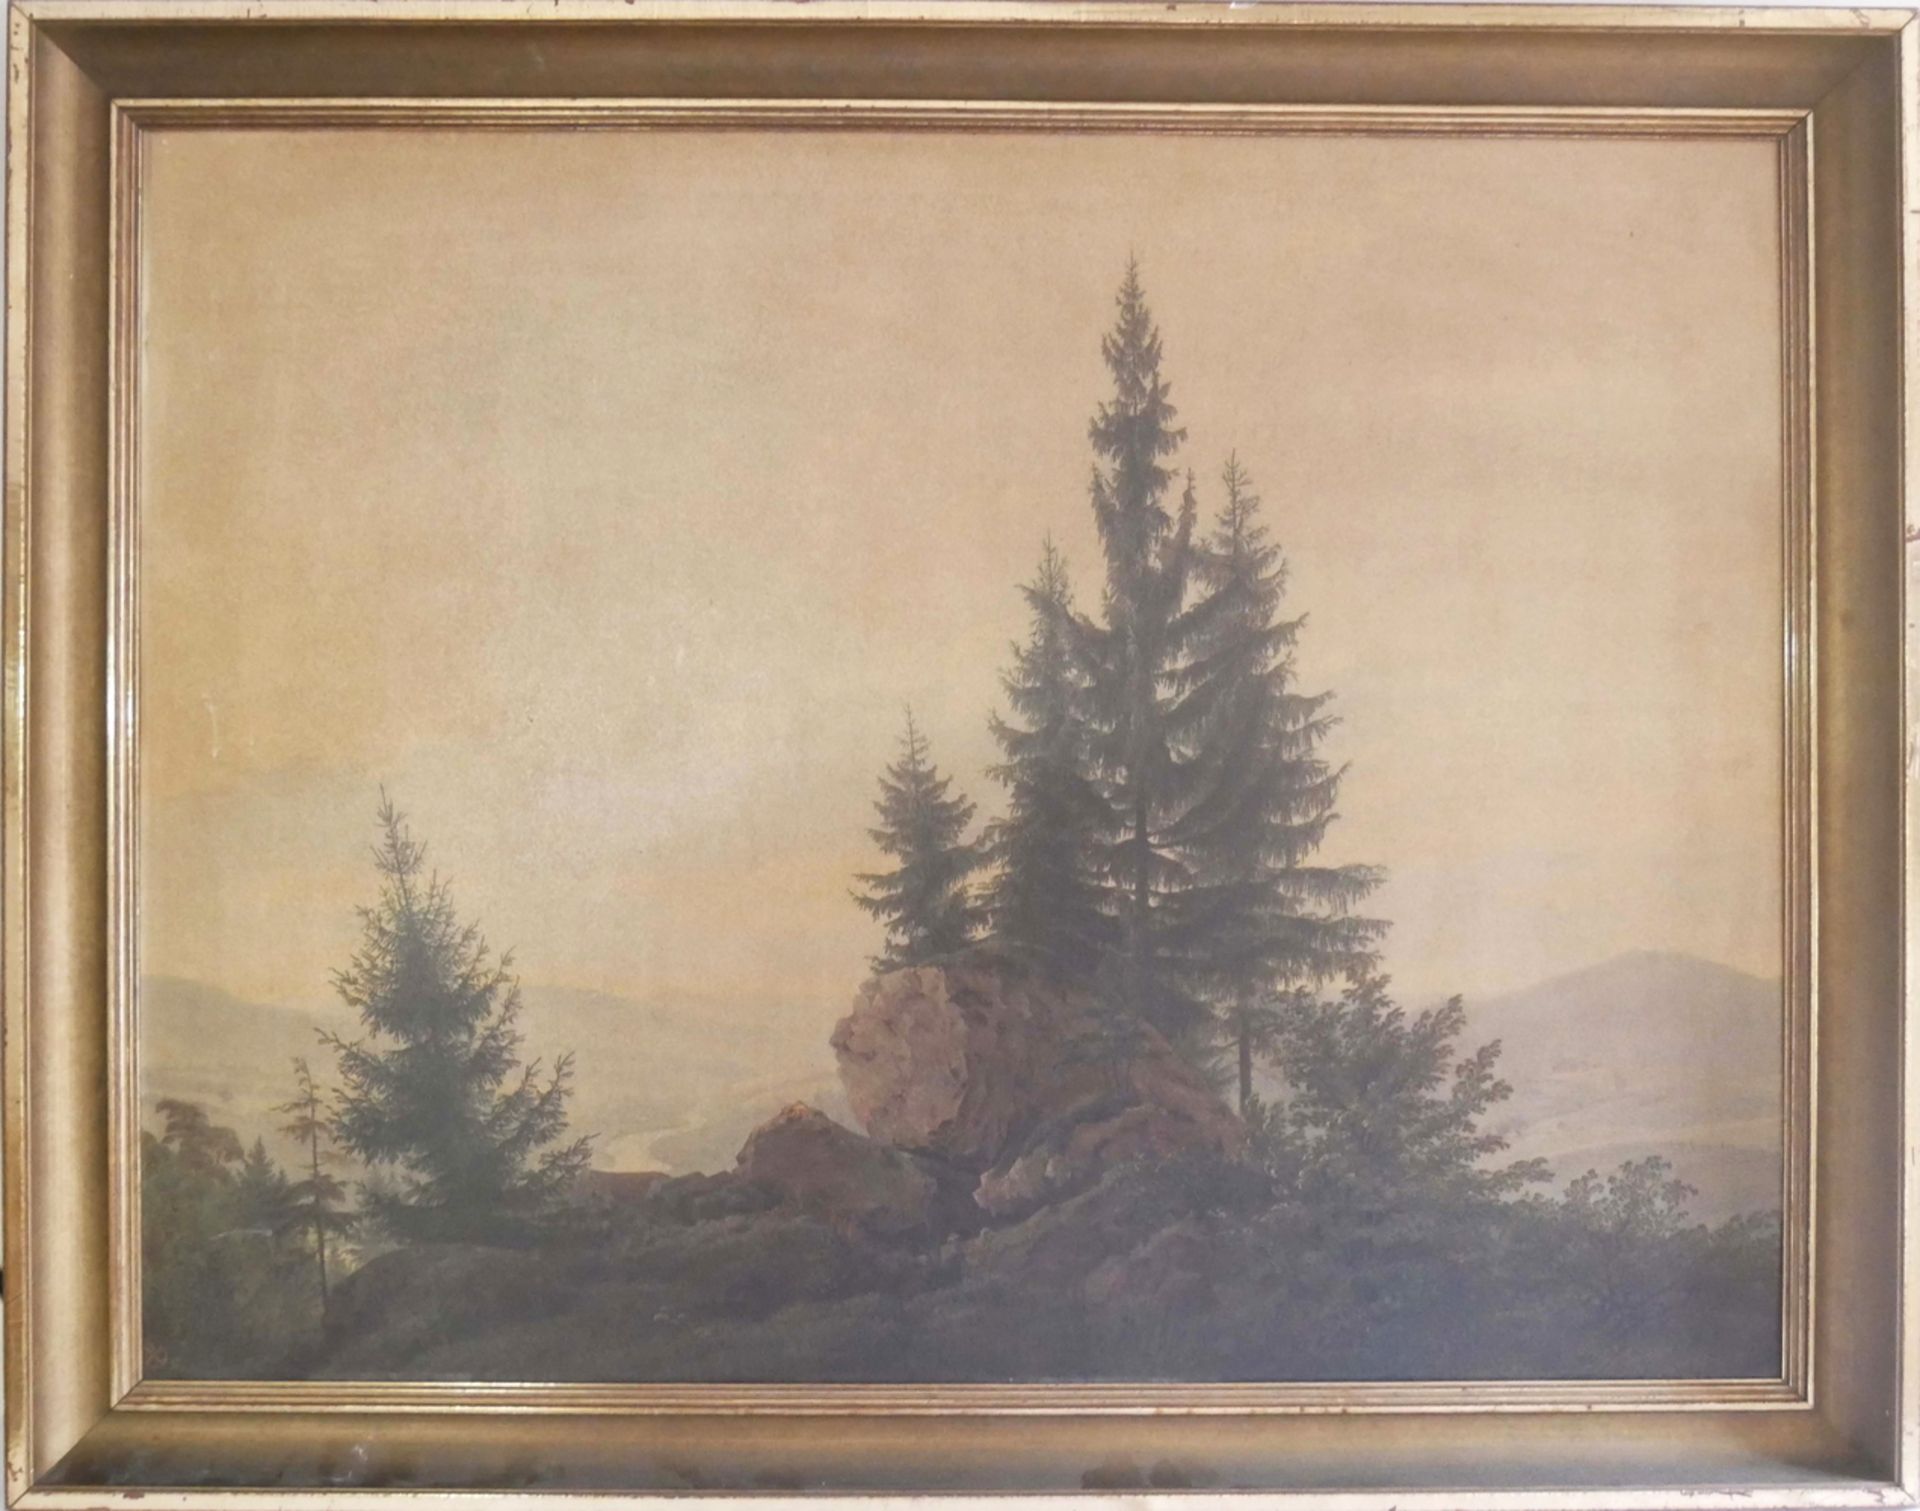 Piperdruck Nr. 112 C.D. Friedrich "Blick ins Elbtal". Maße: Höhe ca. 88,5 cm, Breite ca. 69,5 cm